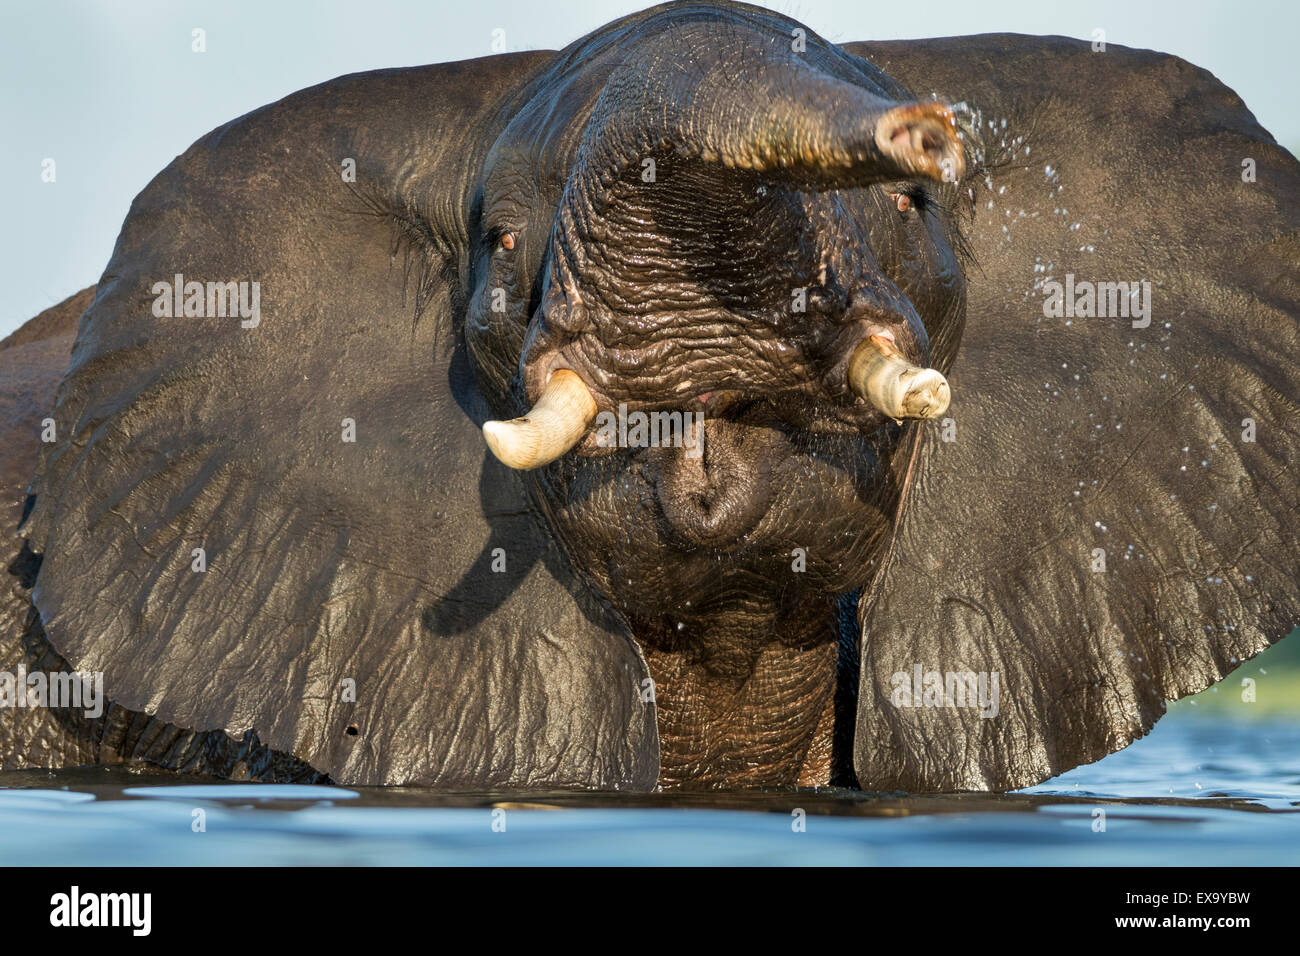 Africa, Botswana Chobe National Park, l'elefante africano (Loxodonta africana) oscilla tronco mentre nuoto sommerso in Chobe Rive Foto Stock